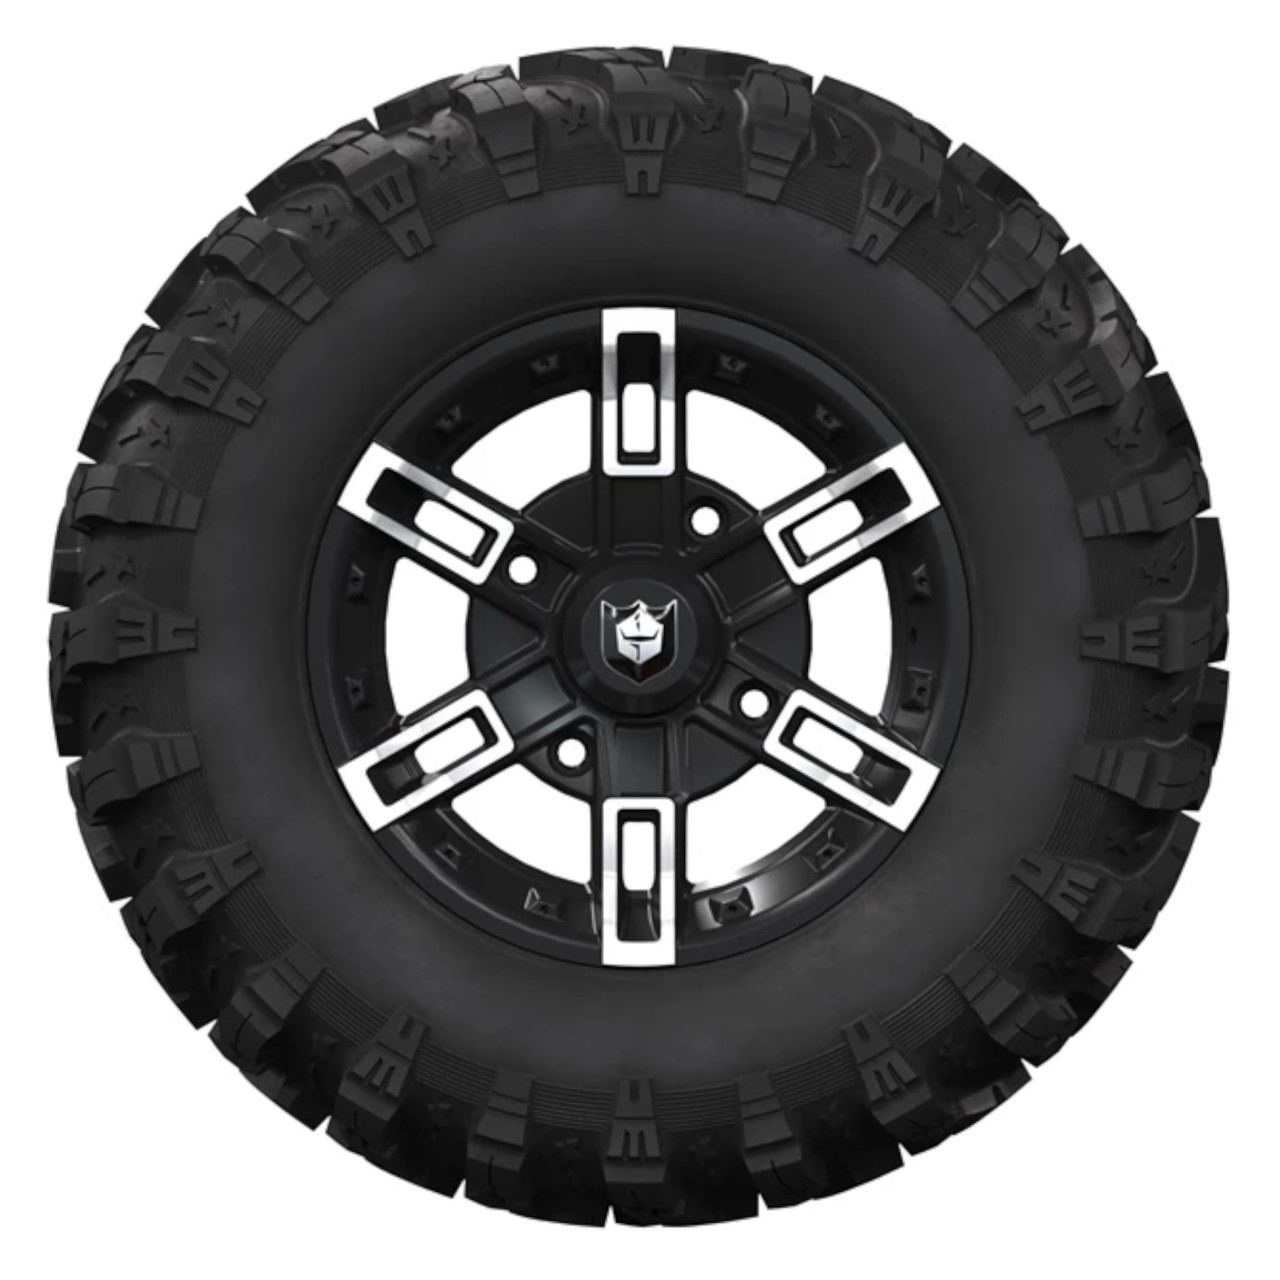 Polaris New OEM Pro Armor Wheel & Tire Set: X Terrain, 27 Inch Diameter, 2889968